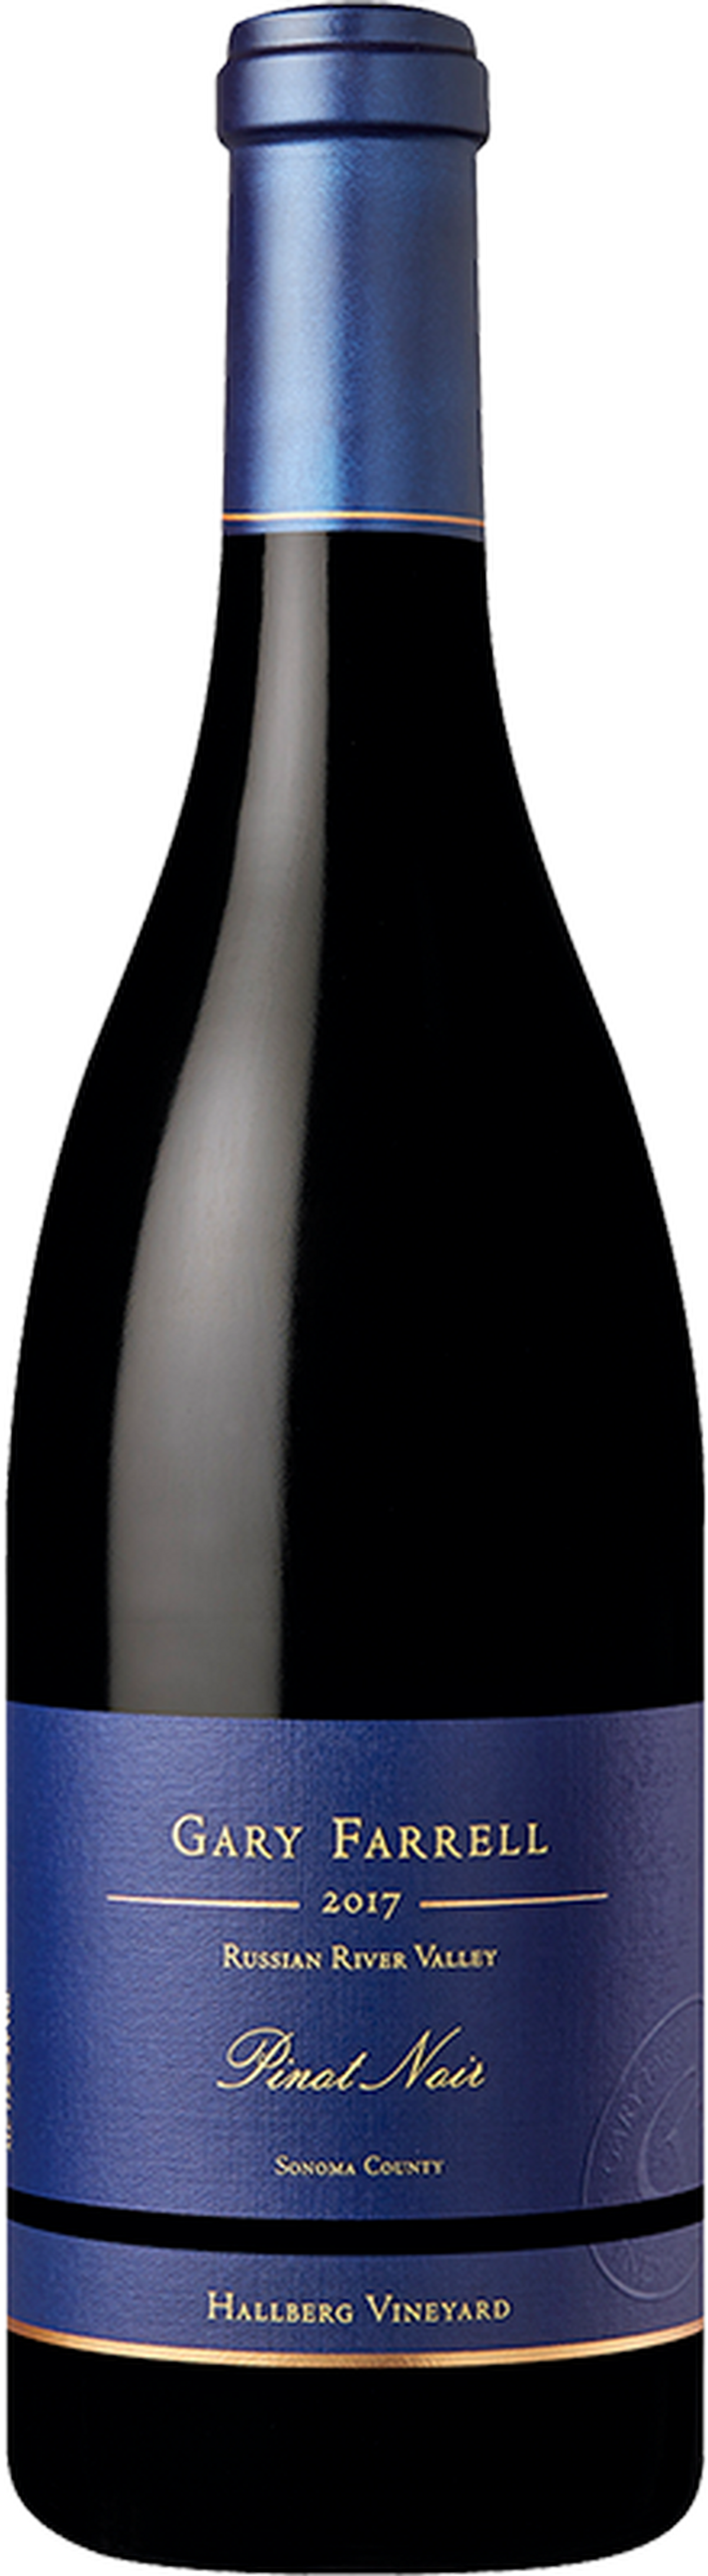 gary farrell 2017 hallberg vineyard pinot noir